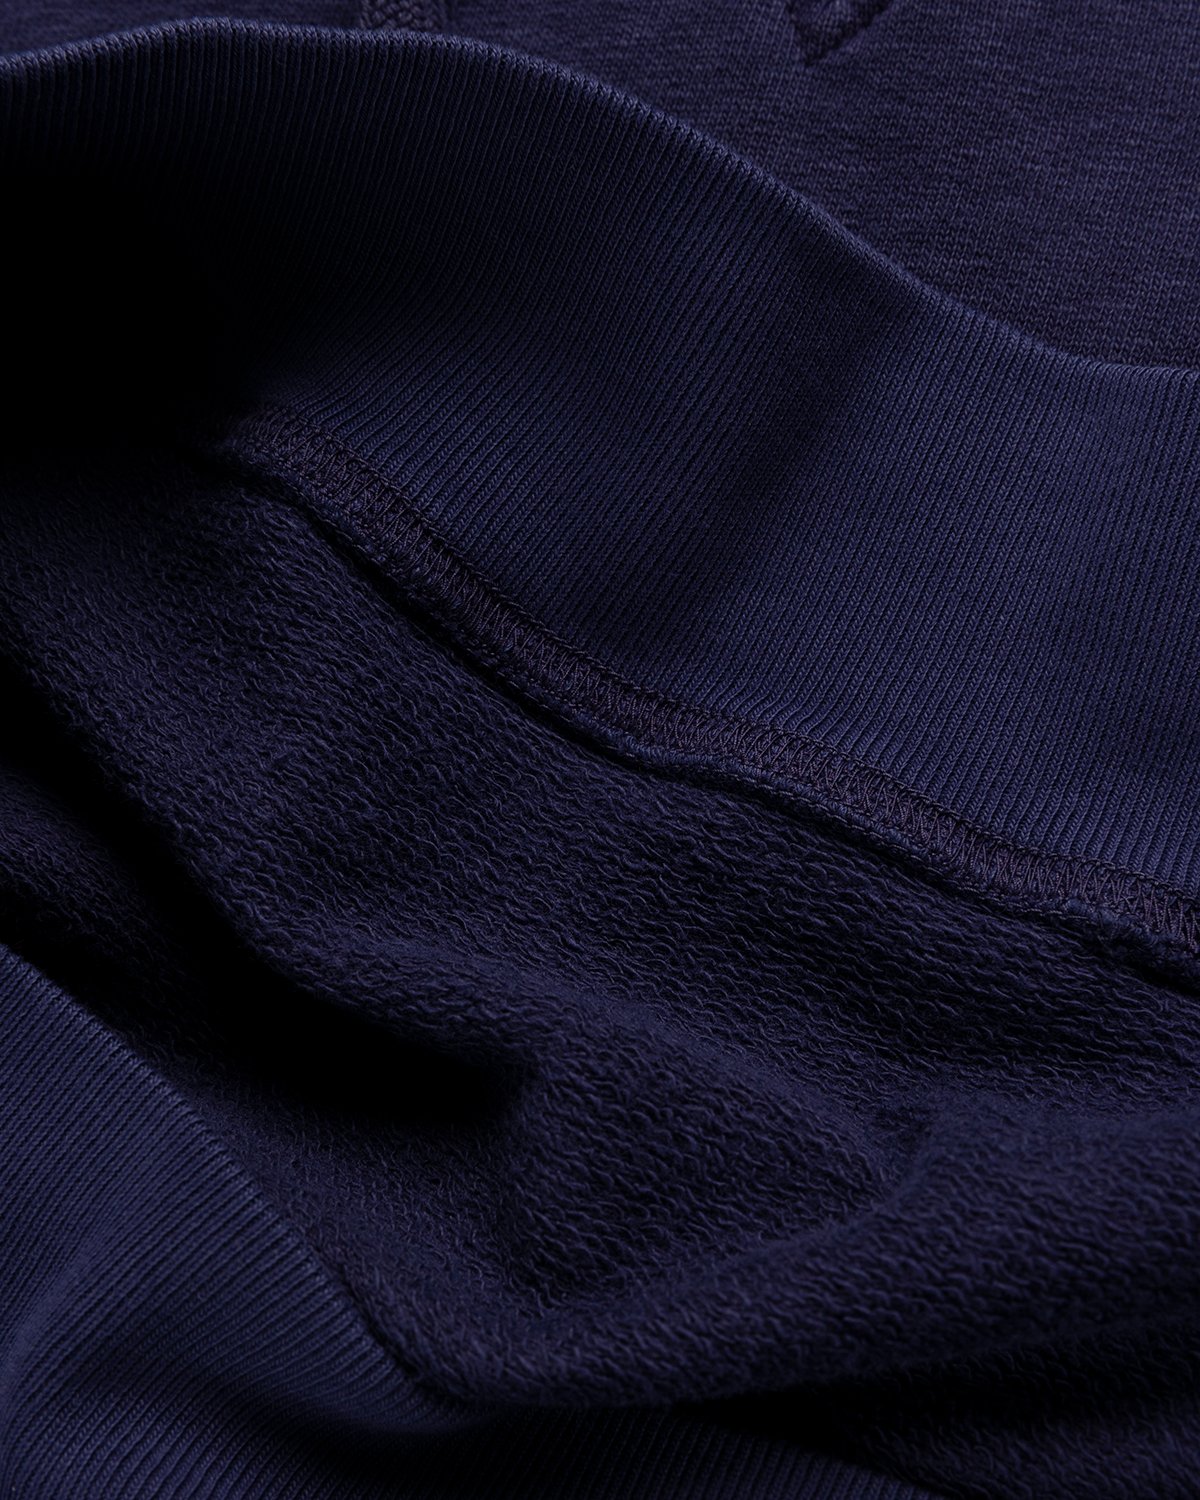 Stone Island - 62160 Garment-Dyed Malfile Fleece Hoodie Ink - Clothing - Blue - Image 3